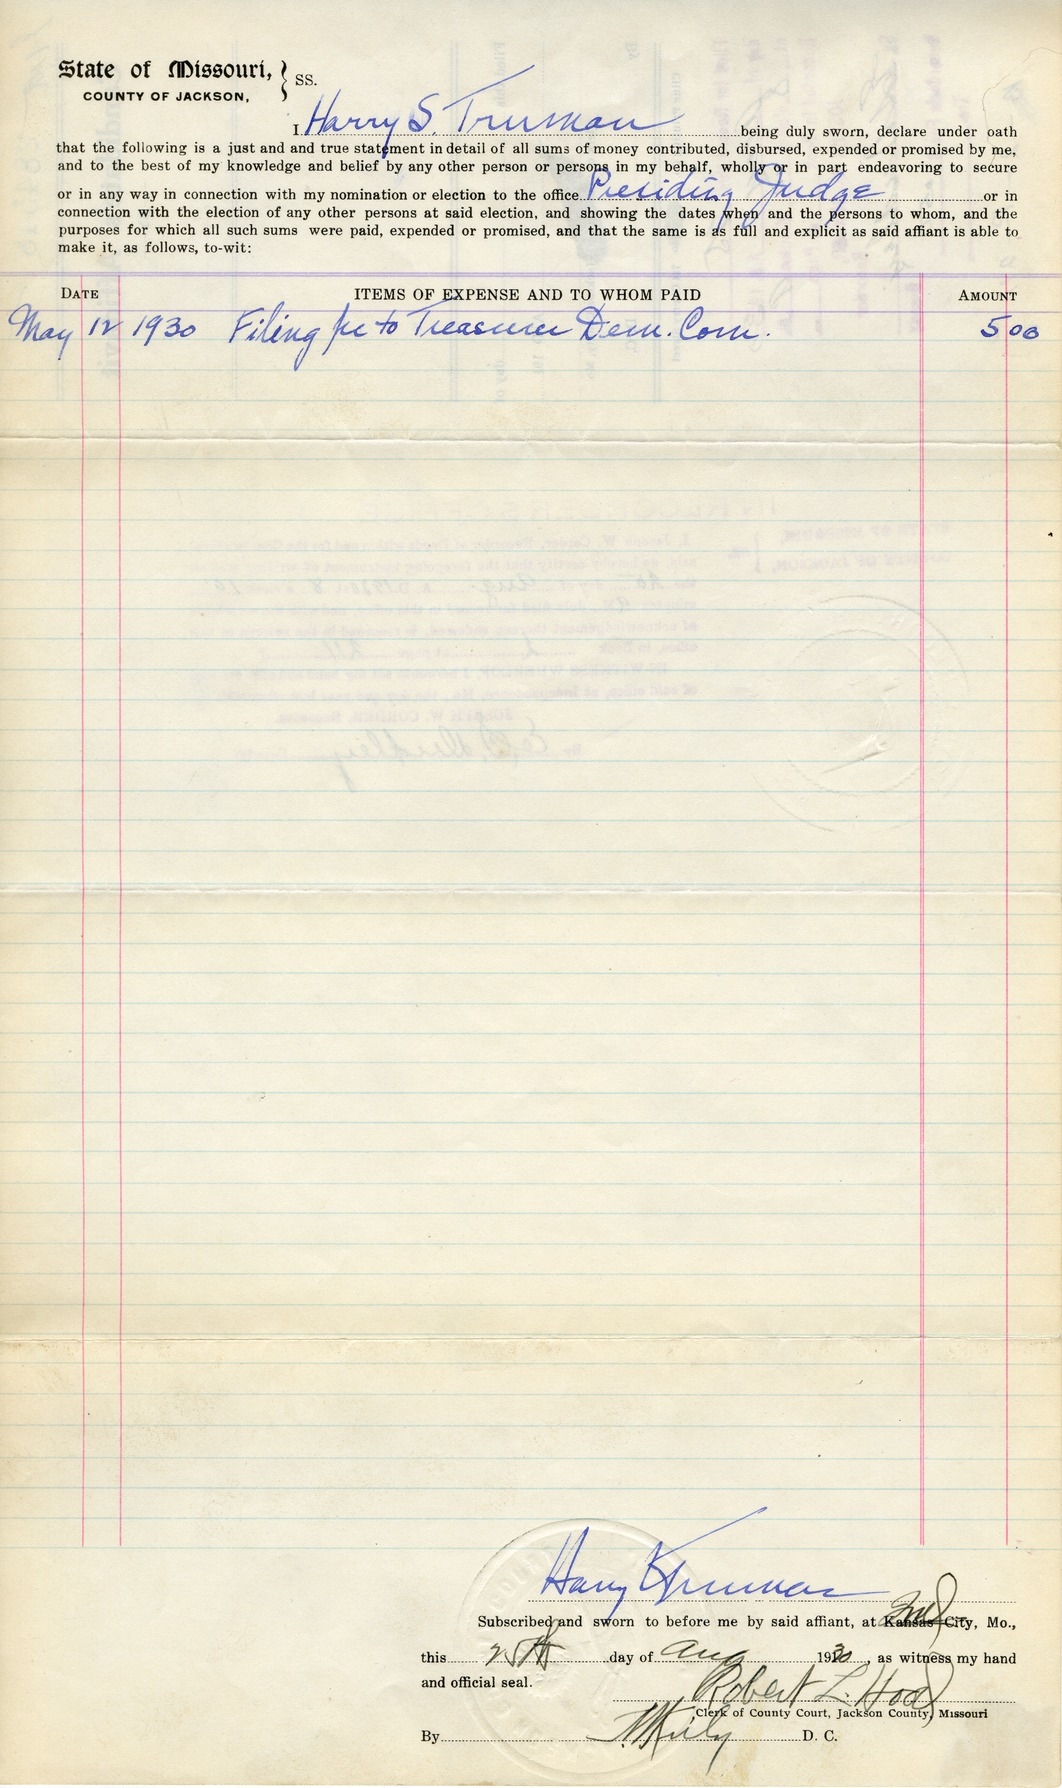 Candidate's Affidavit of Harry S. Truman